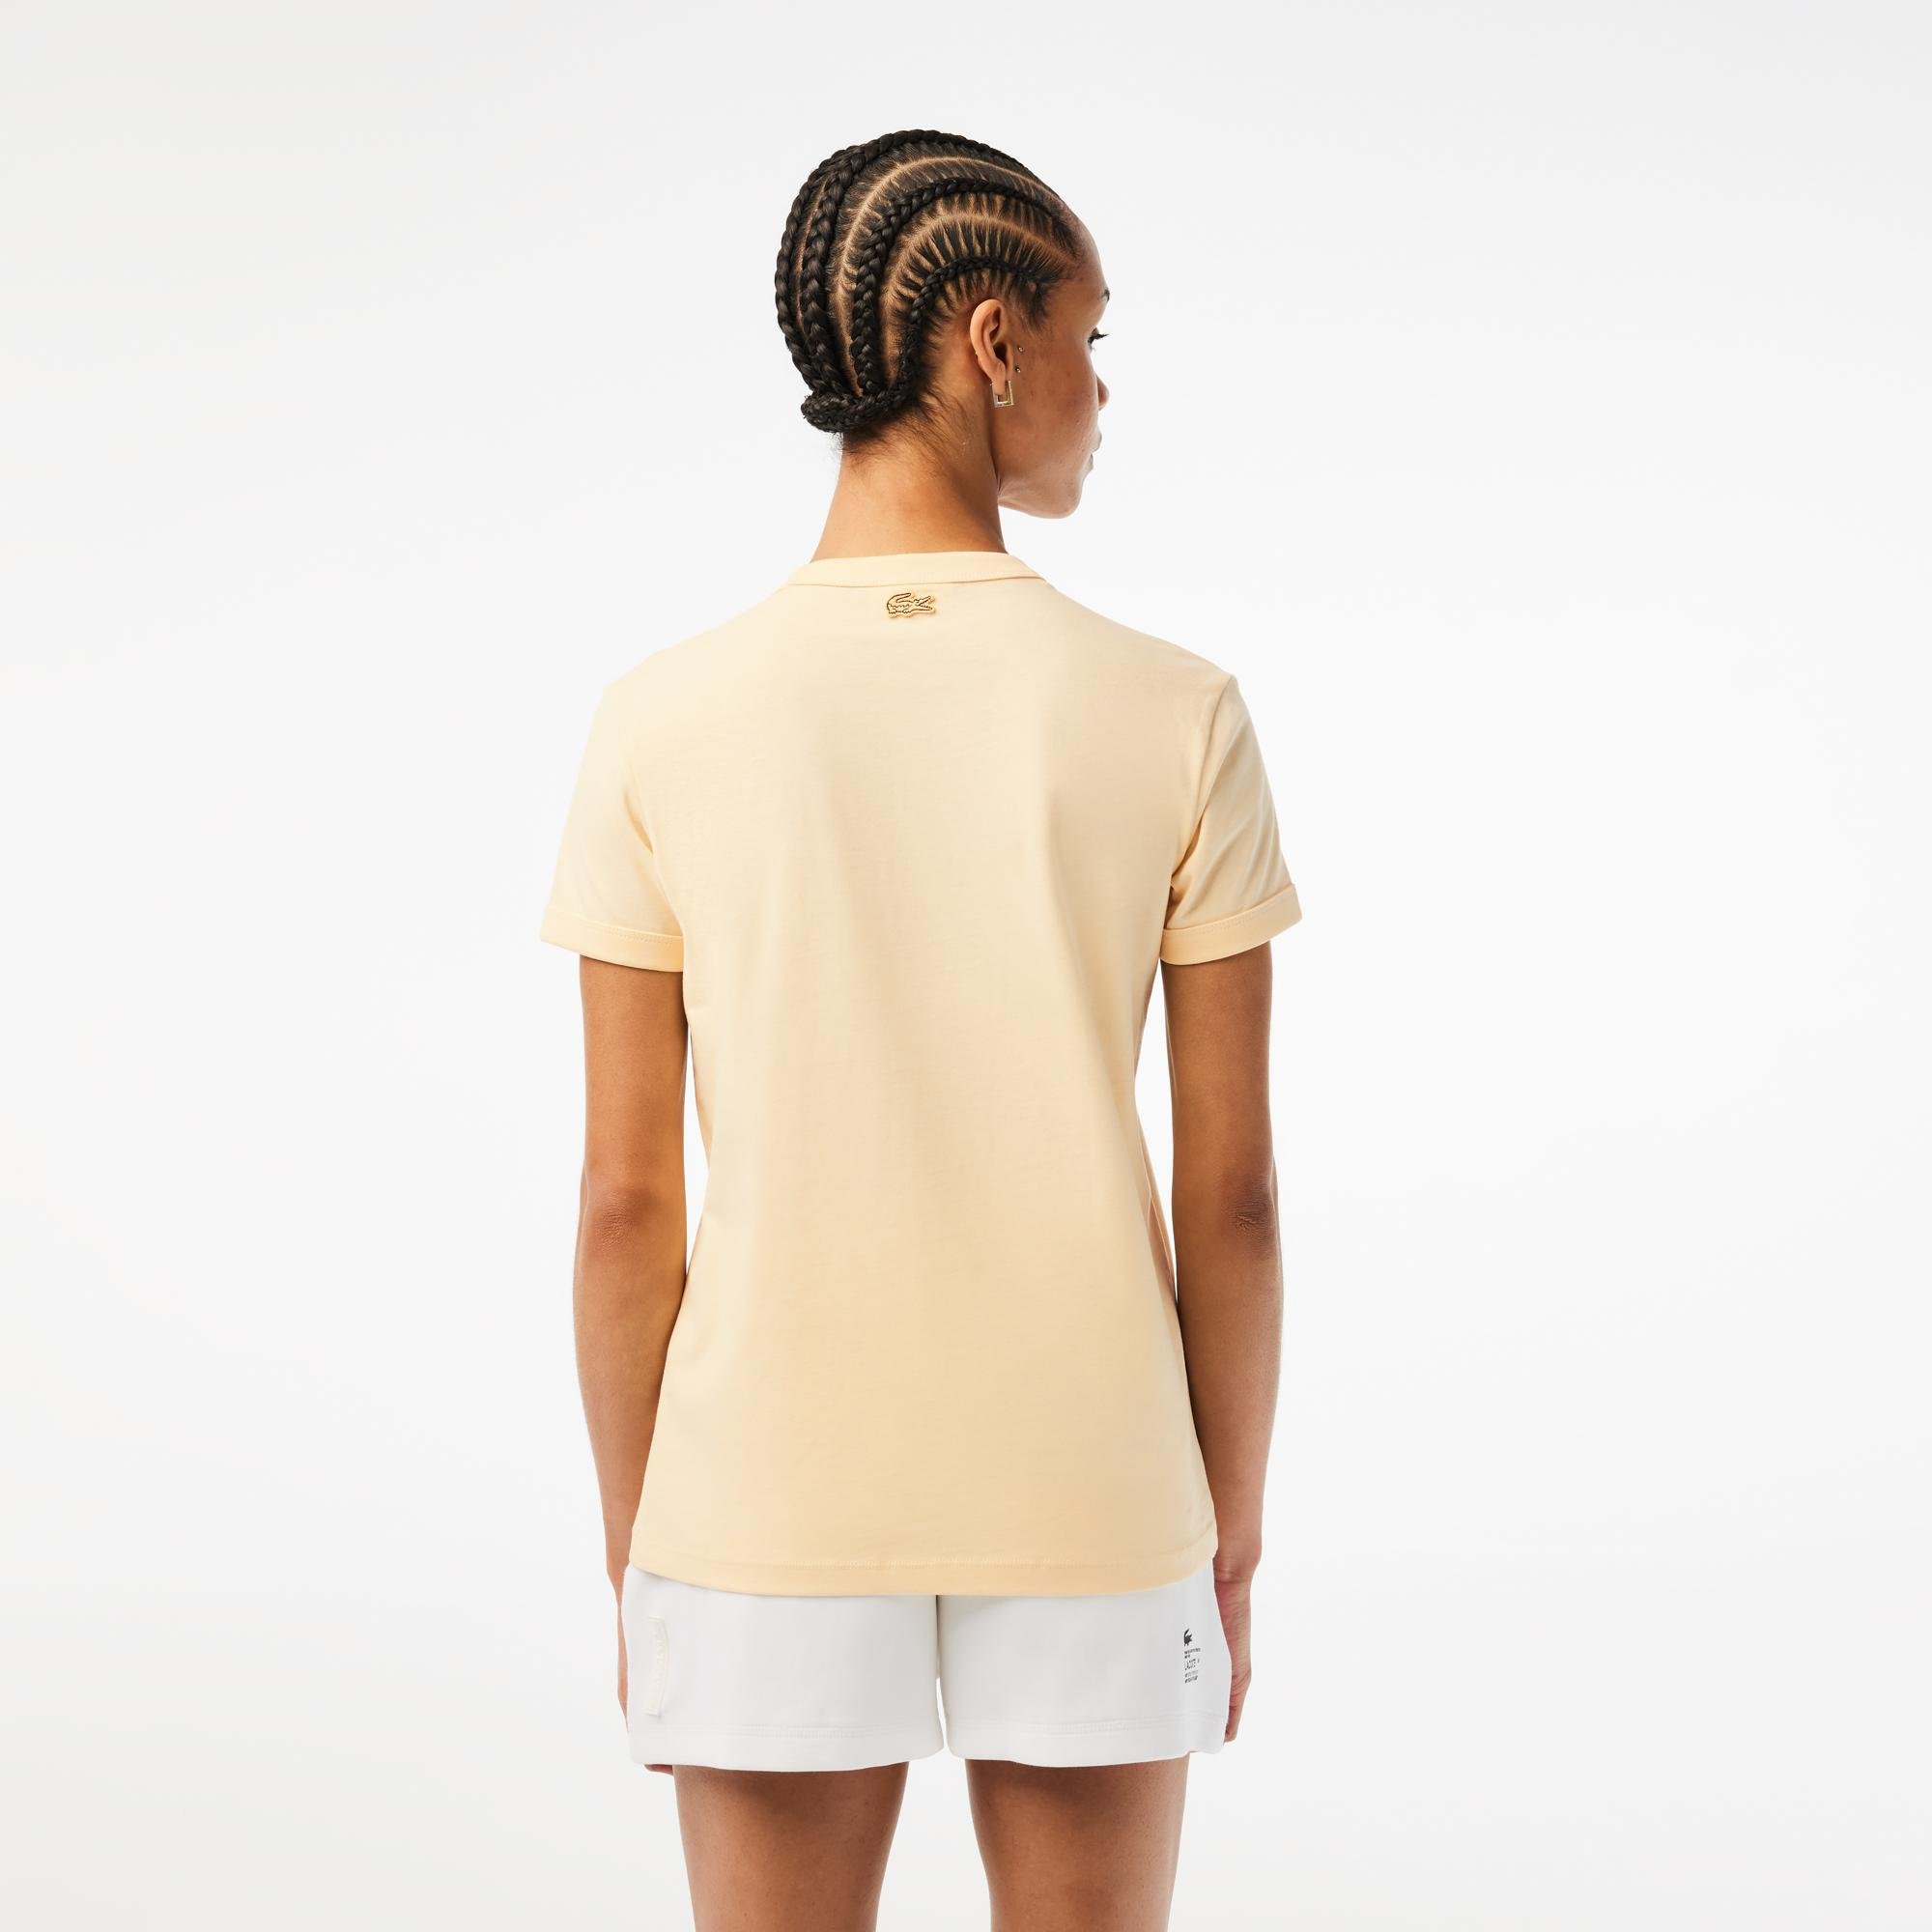 Dámske tričko Lacoste Slim Fit z organickej bavlny